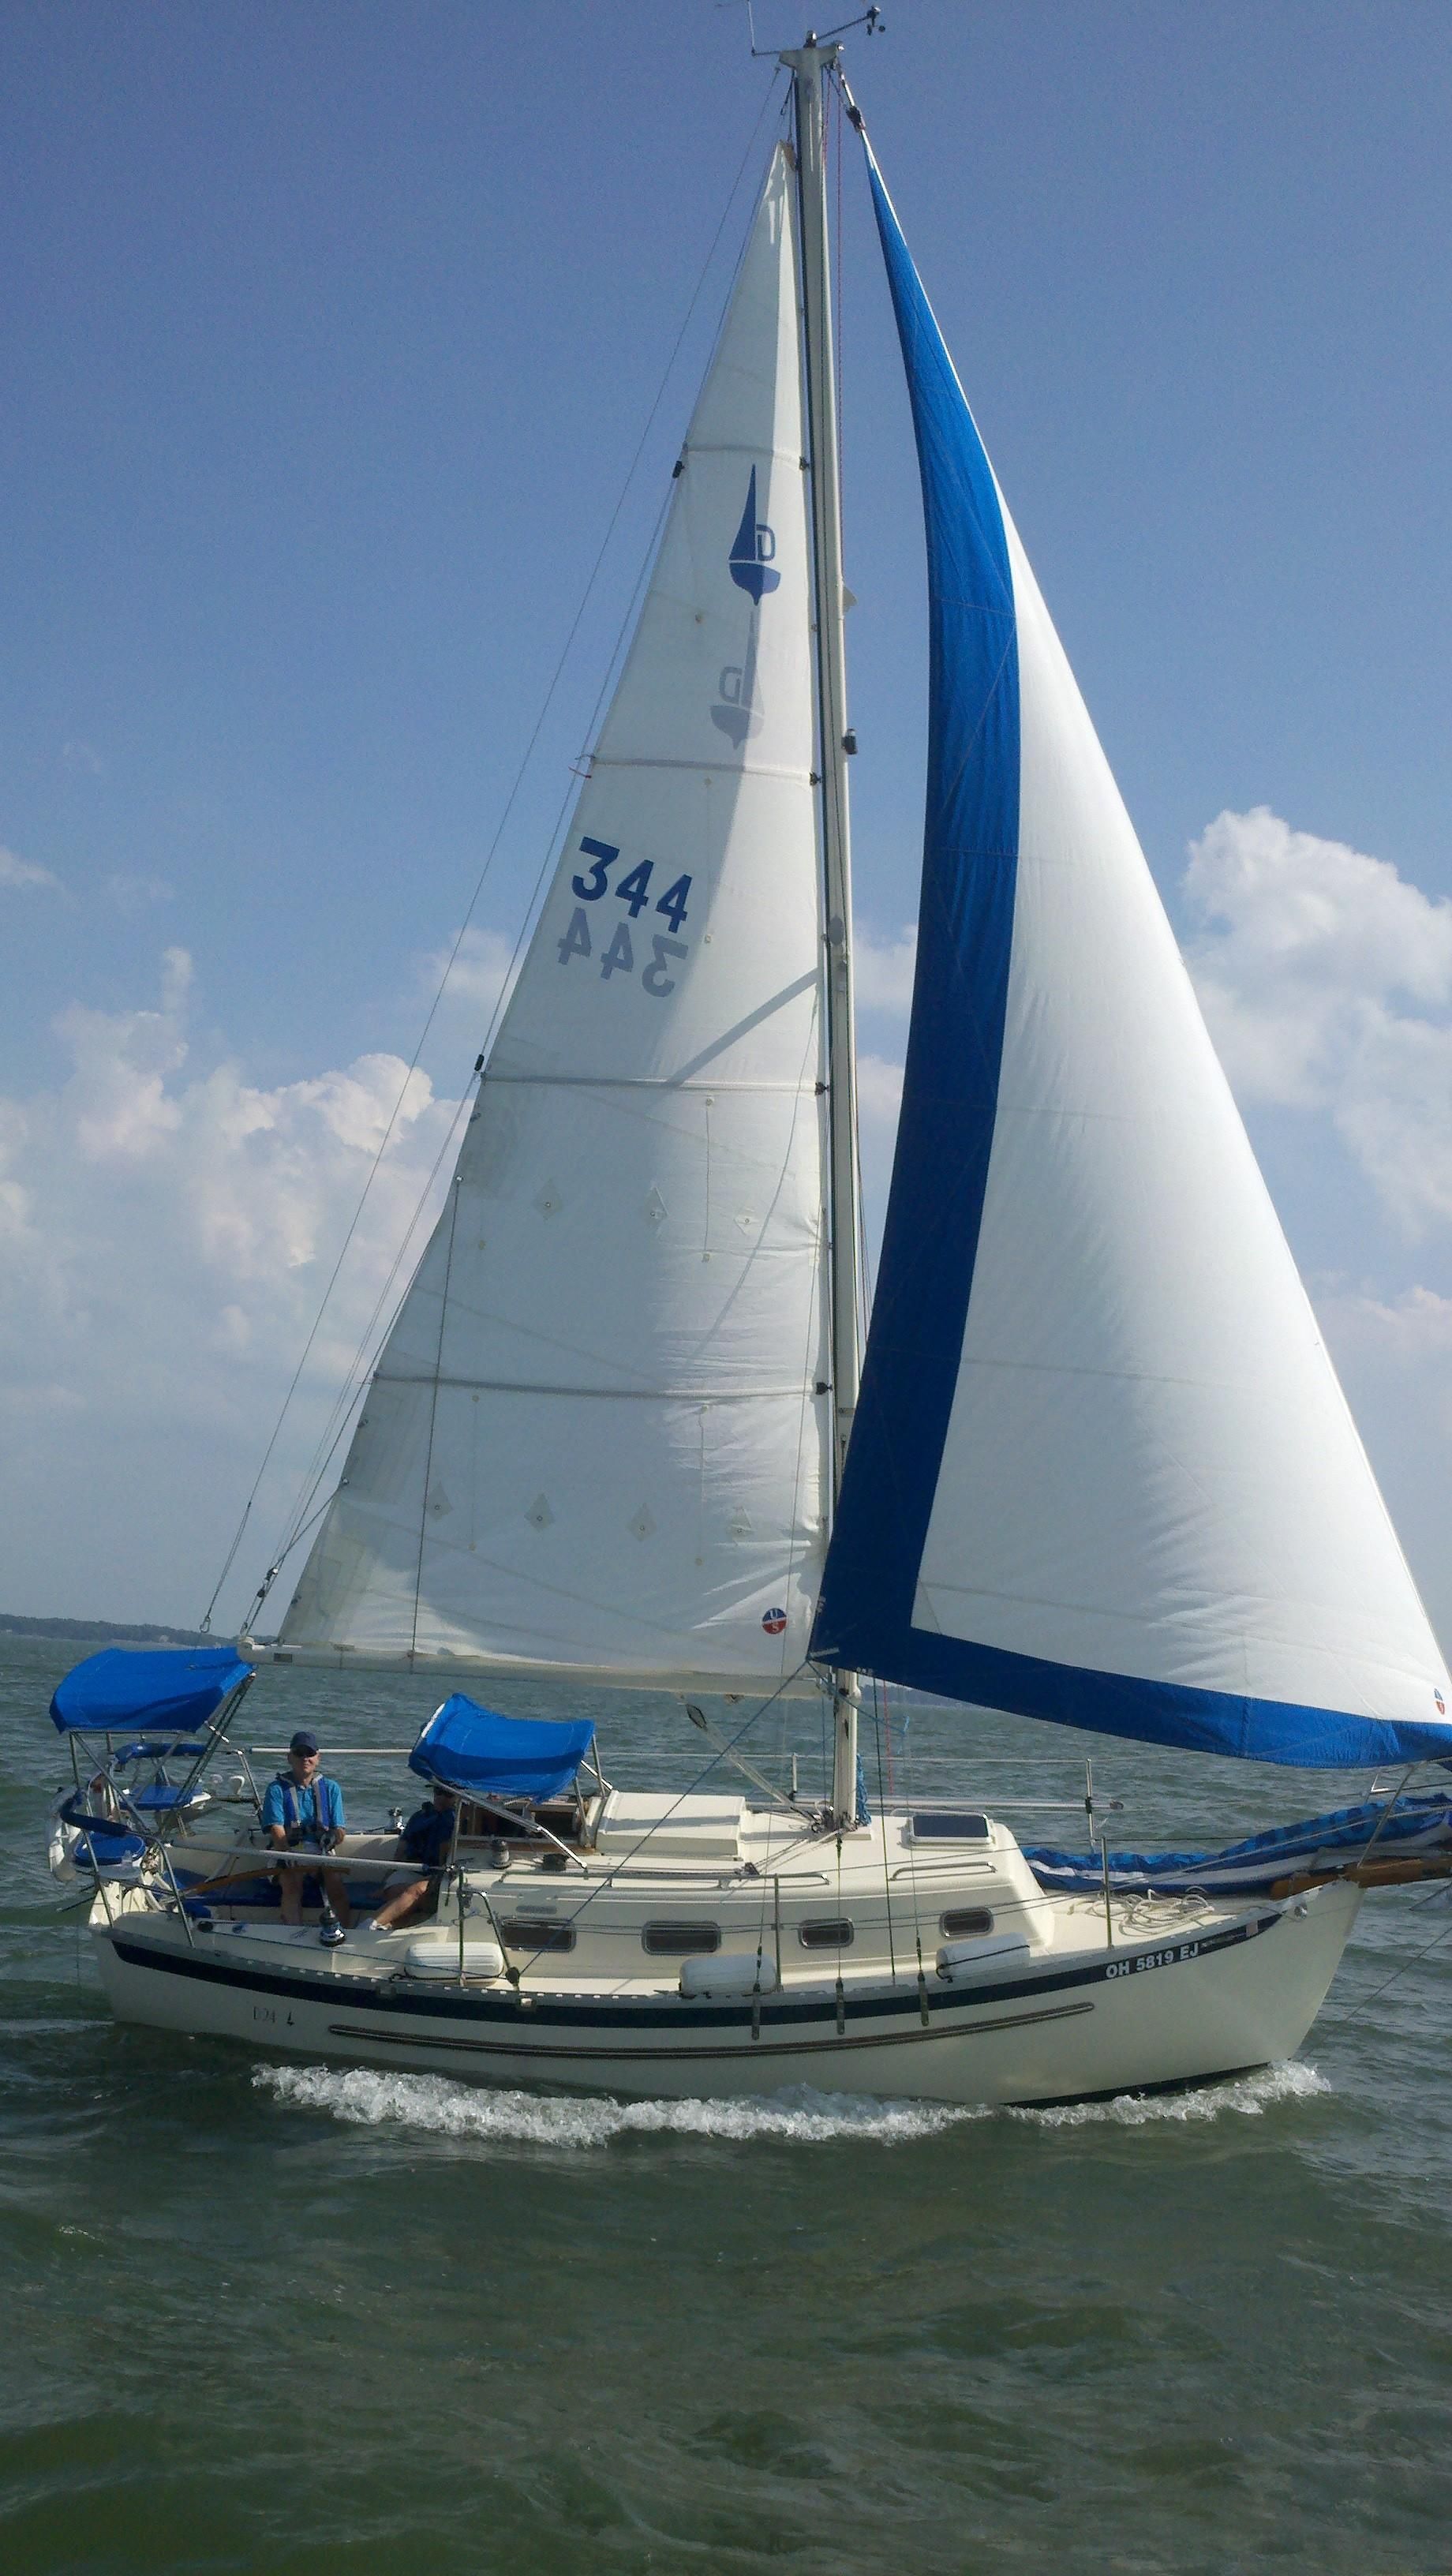 dana 24 yachts for sale